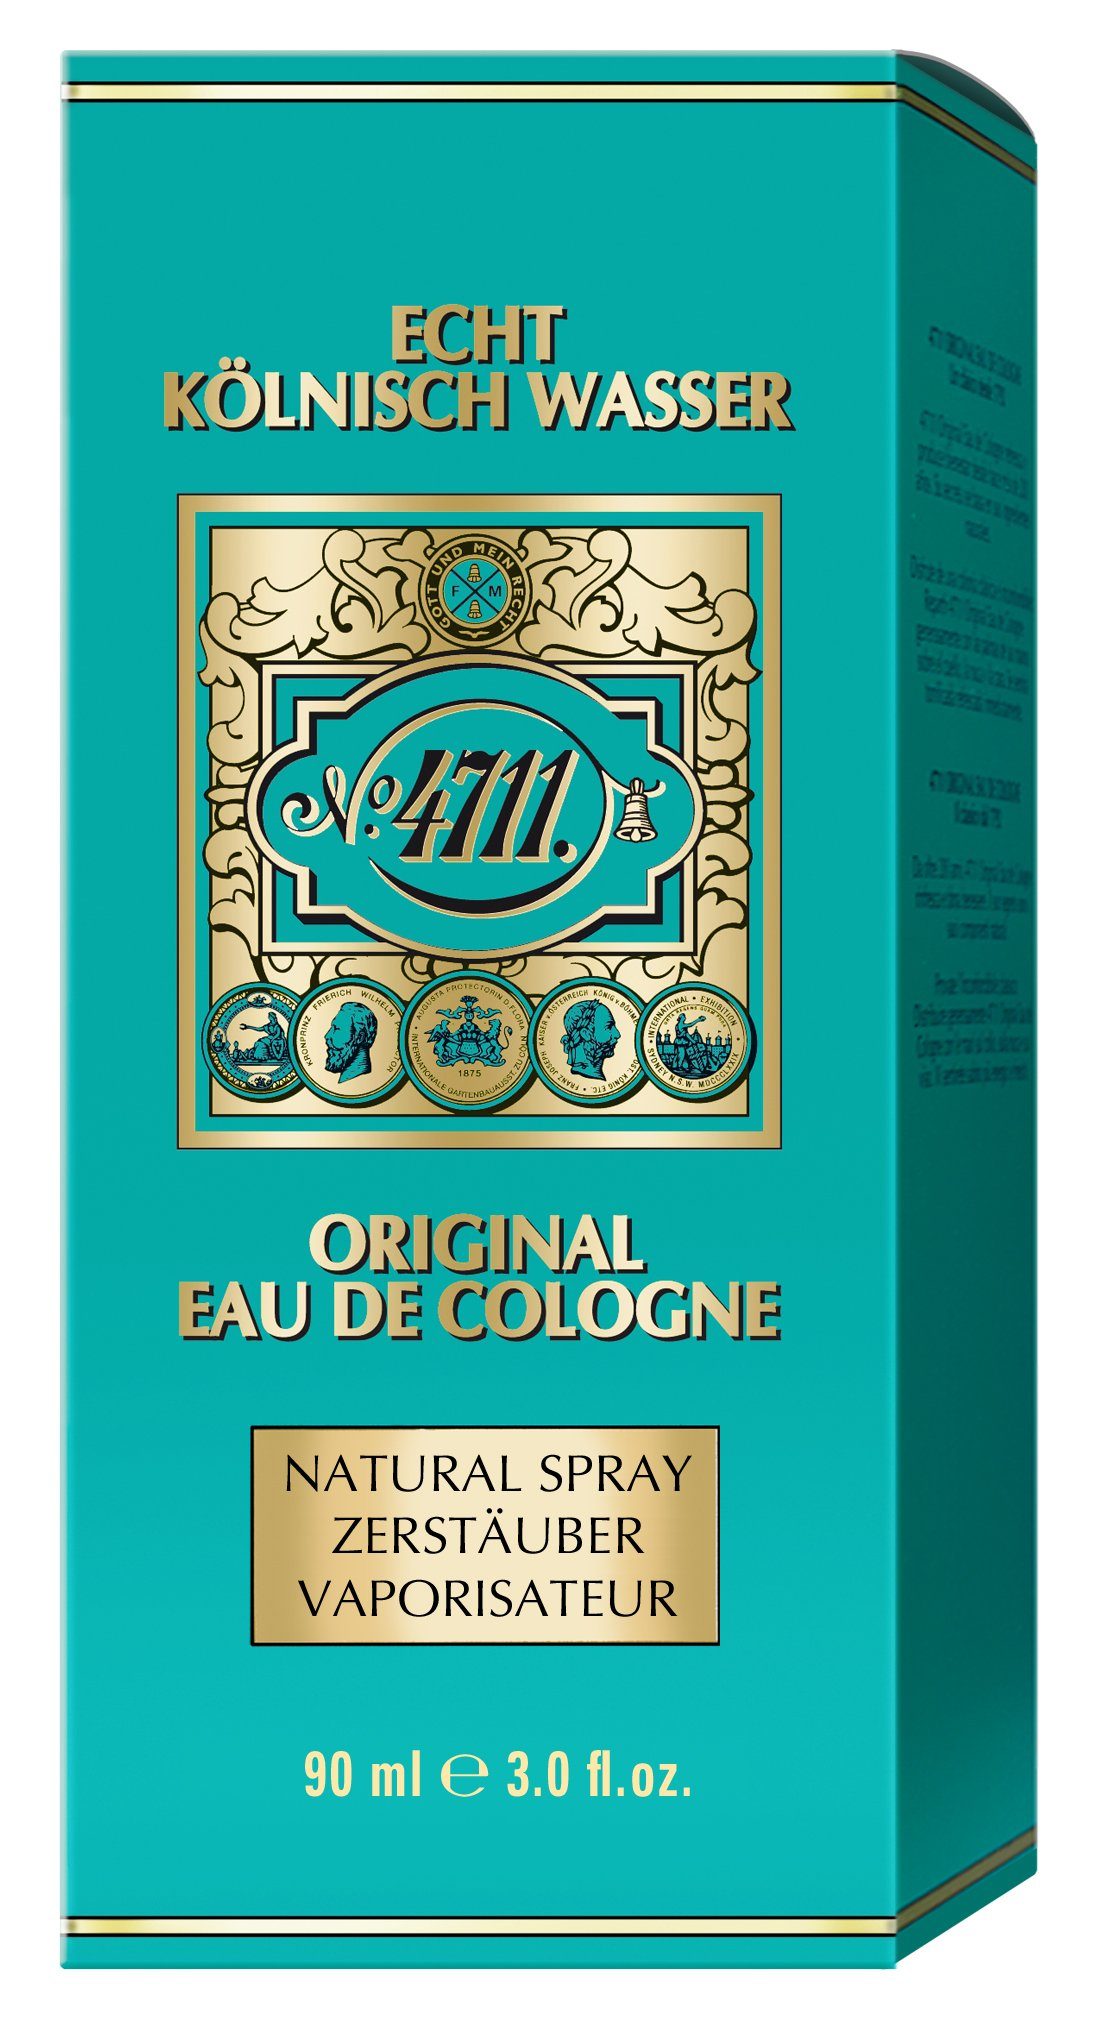 Spray 4711 de Cologne Cologne Eau Echt de Natural 4711 ml 90 Wasser Eau Kölnisch